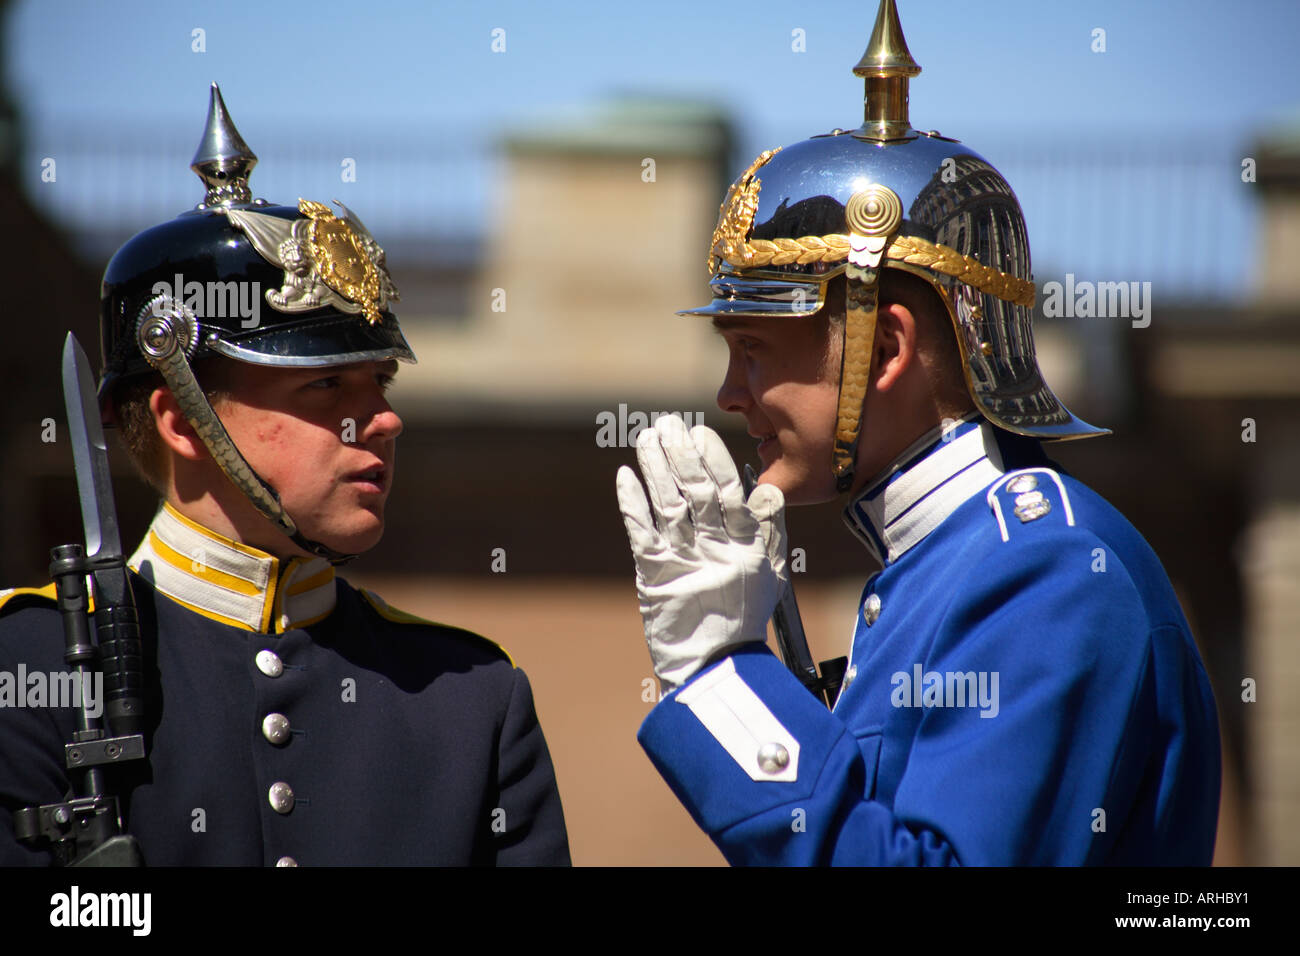 Changing of the Guard Kungliga Slottet The Royal Palace Gamla Stan Stockholm Sweden Scandinavia Stock Photo